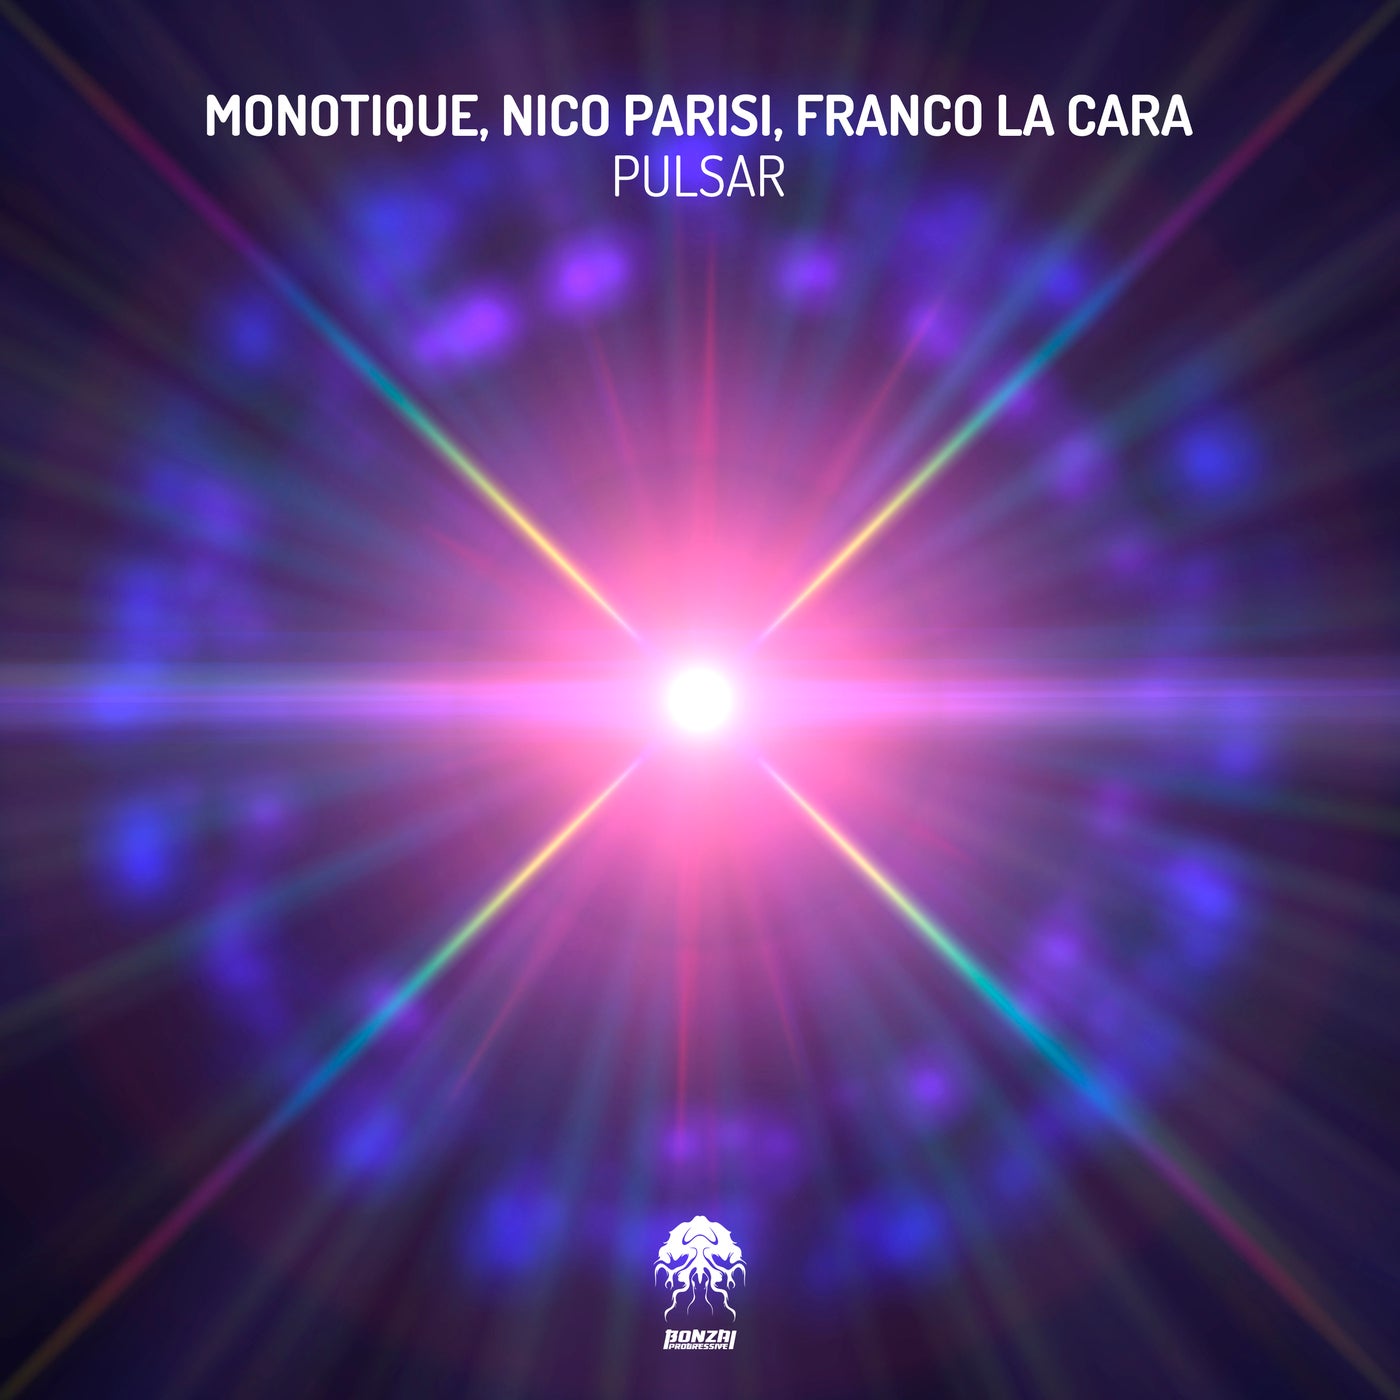 Nico Parisi, Franco la Cara, Monotique - Pulsar (Köschk Remix)